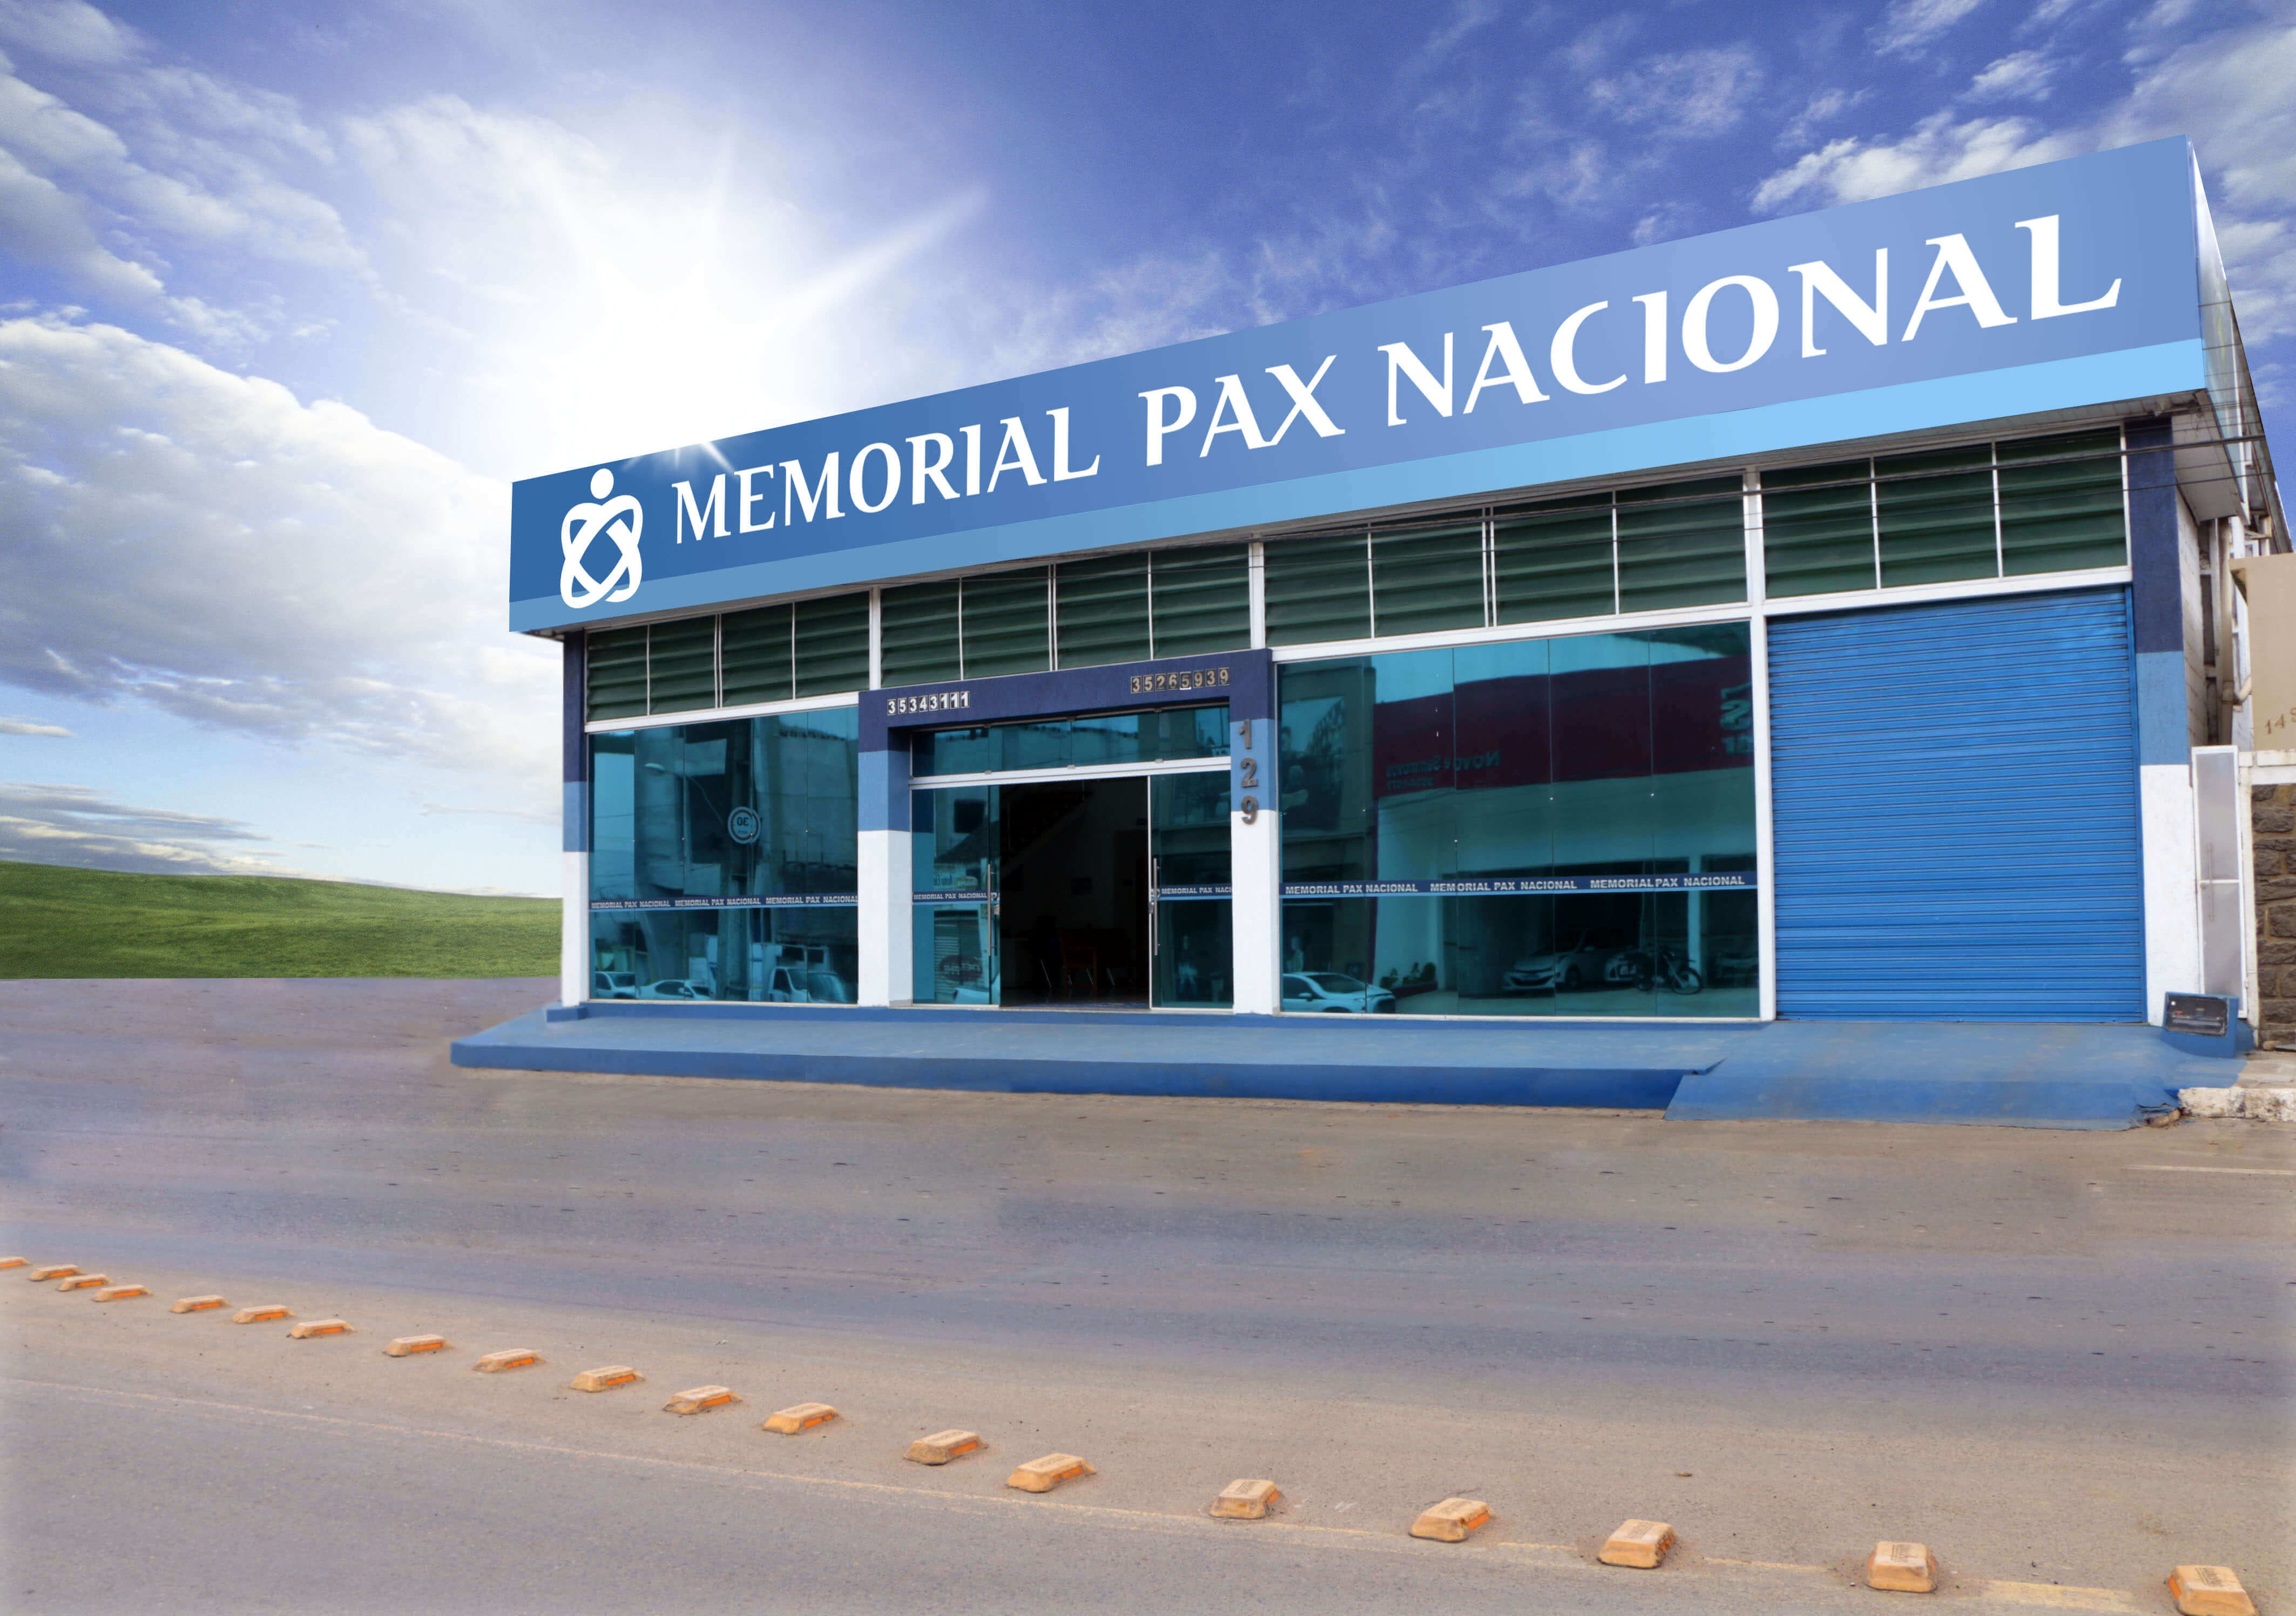 Memorial Pax Nacional - Jaguaquara